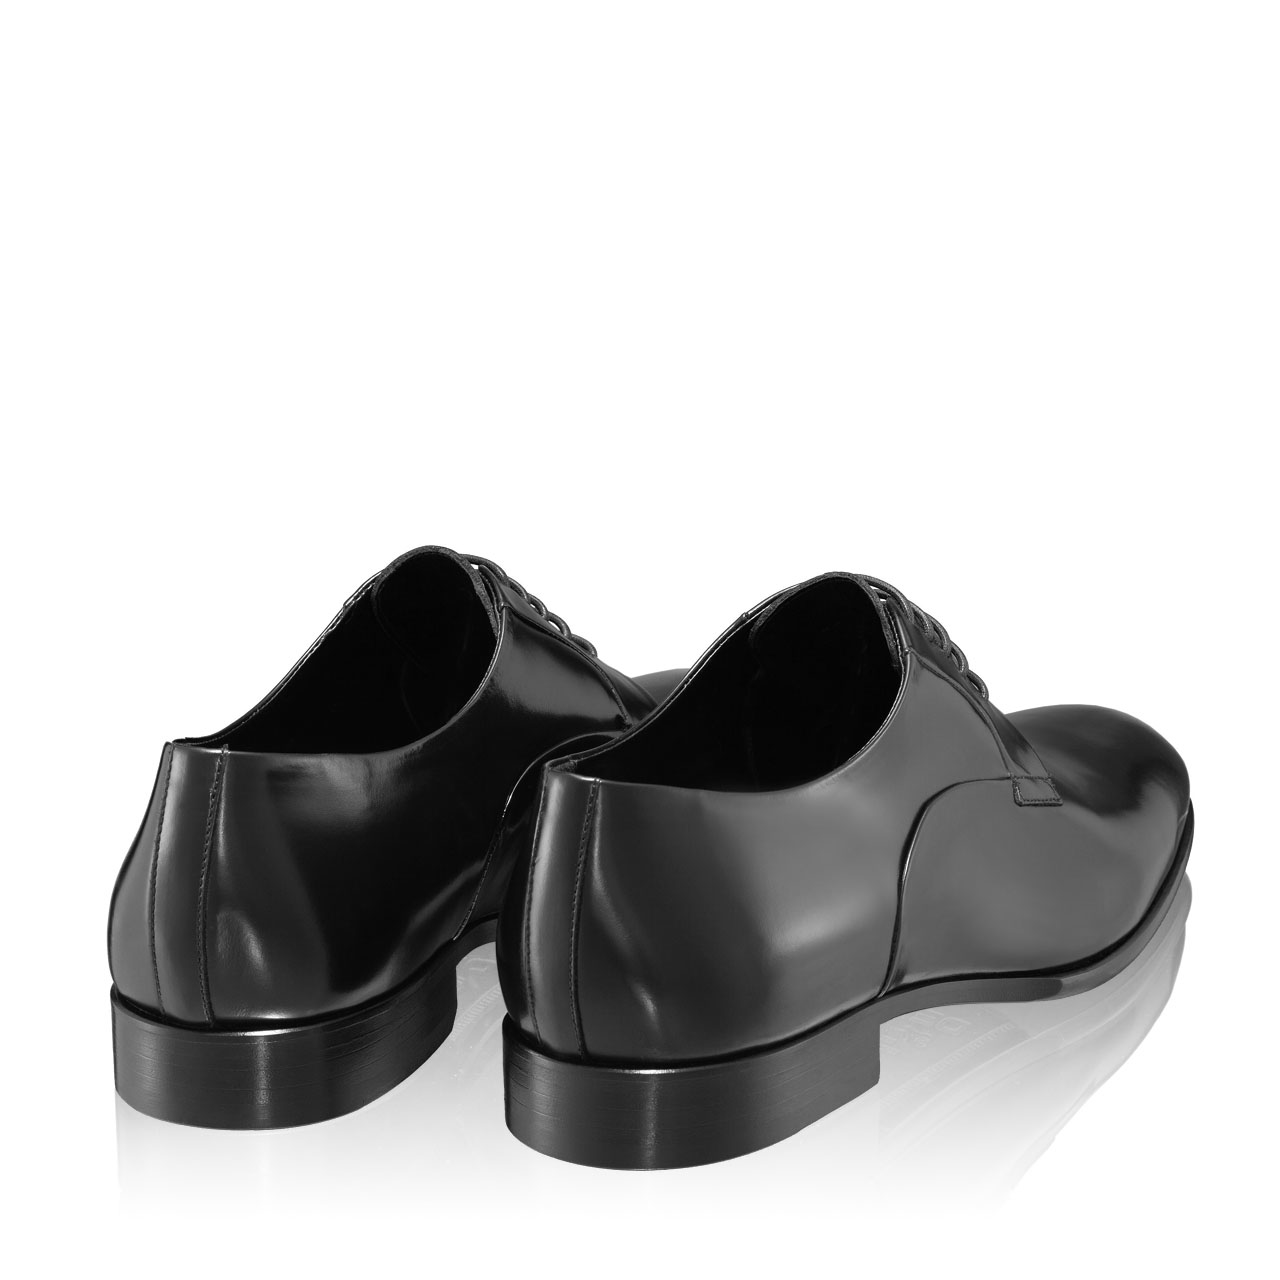 Imagine Pantofi Eleganti Barbati 7034 Abrazivato Negru